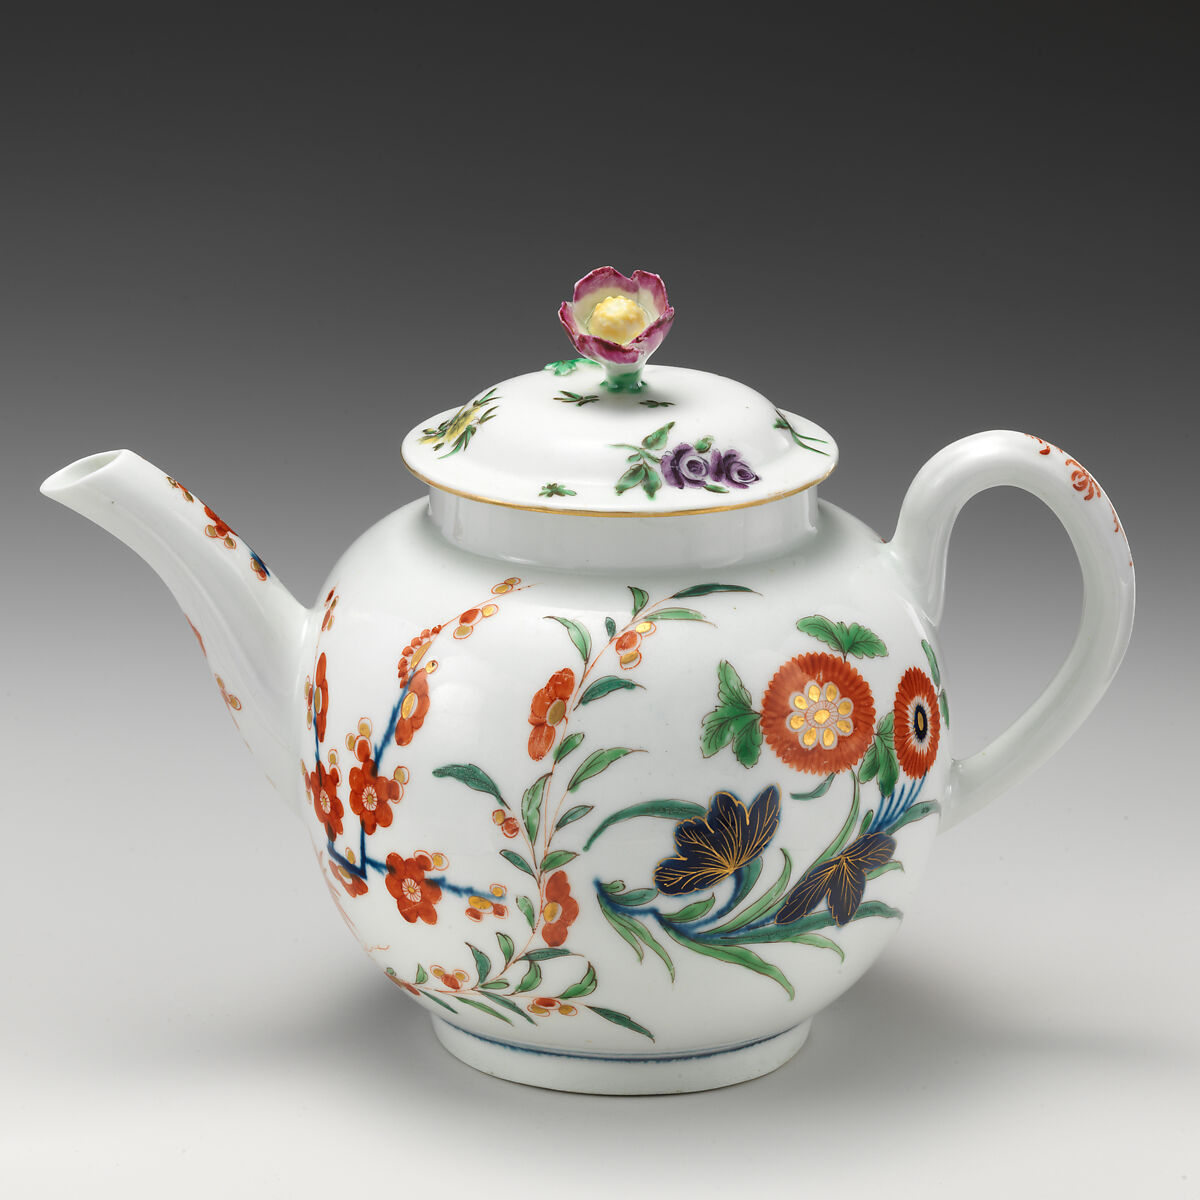 Teapot (part of a service), Worcester factory (British, 1751–2008), Soft-paste porcelain with enamel decoration and gilding, British, Worcester 